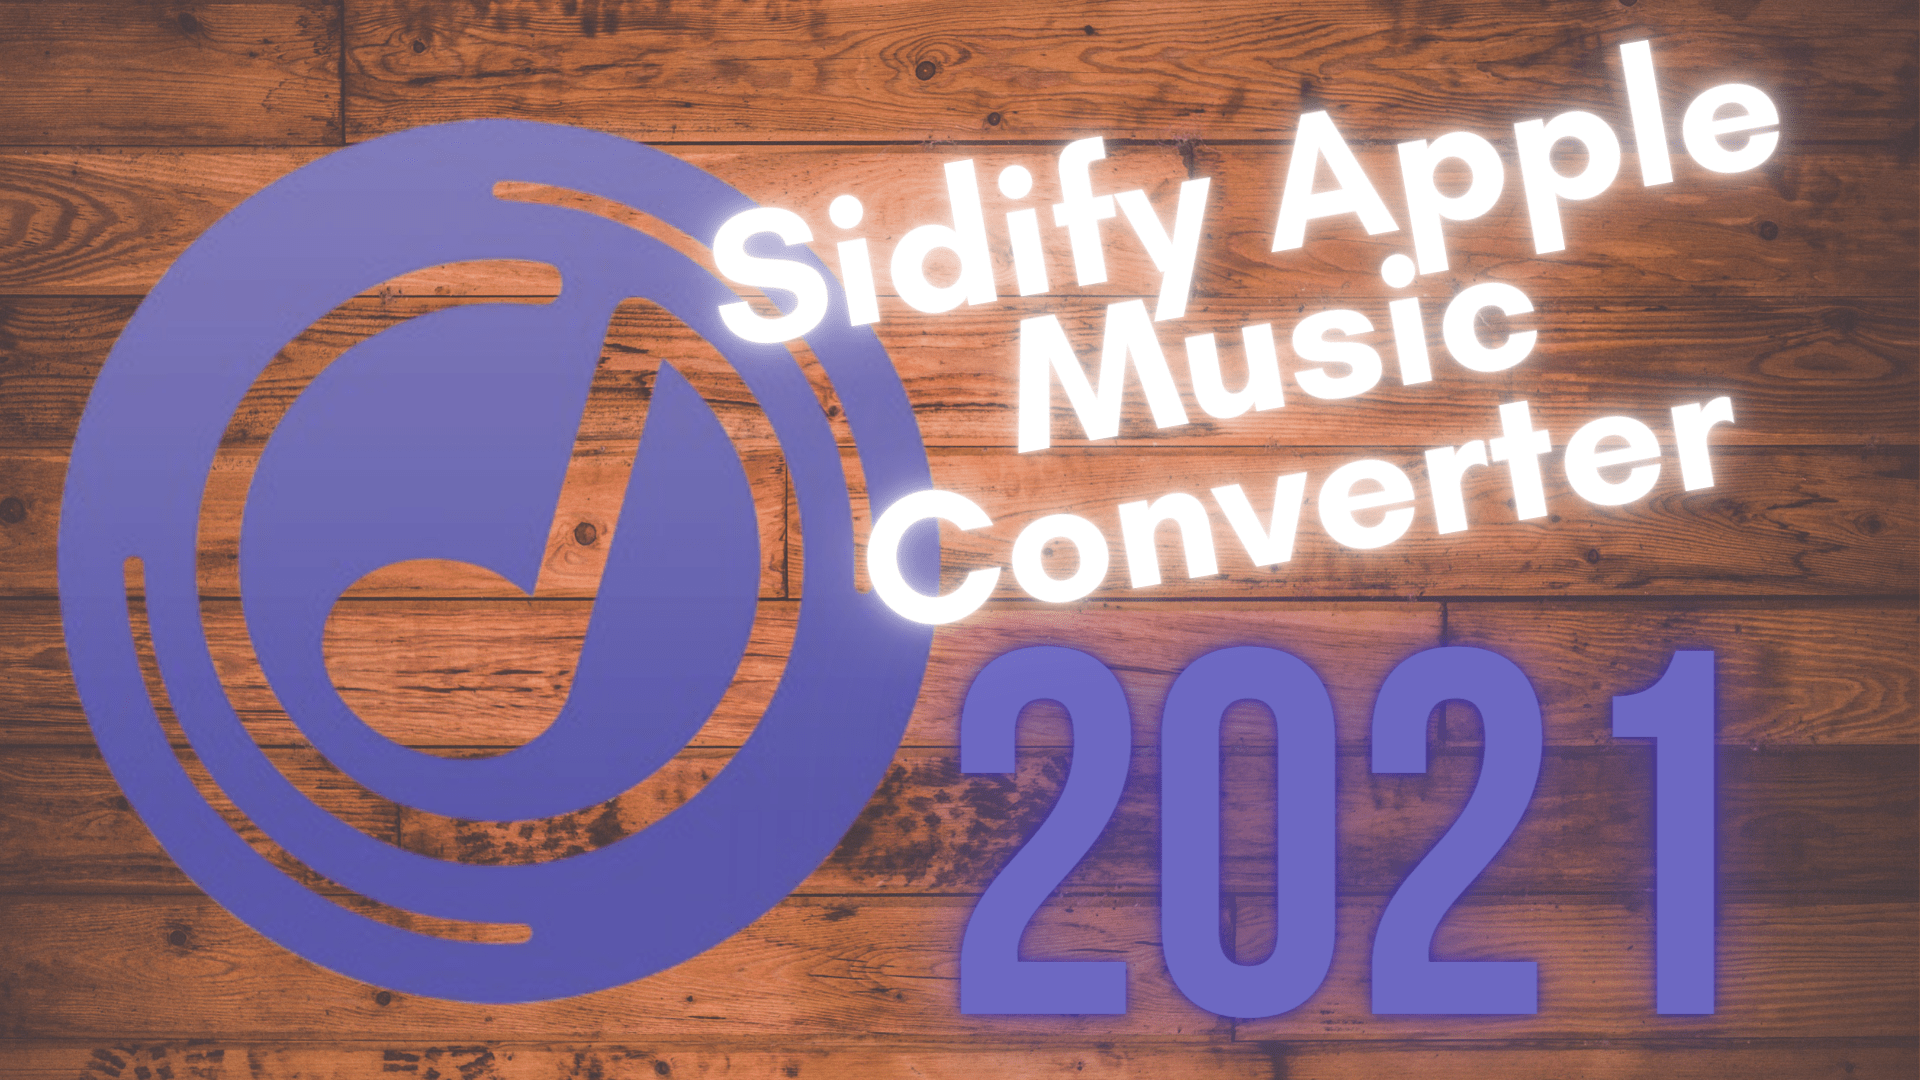 sidify apple music converter for mac crack